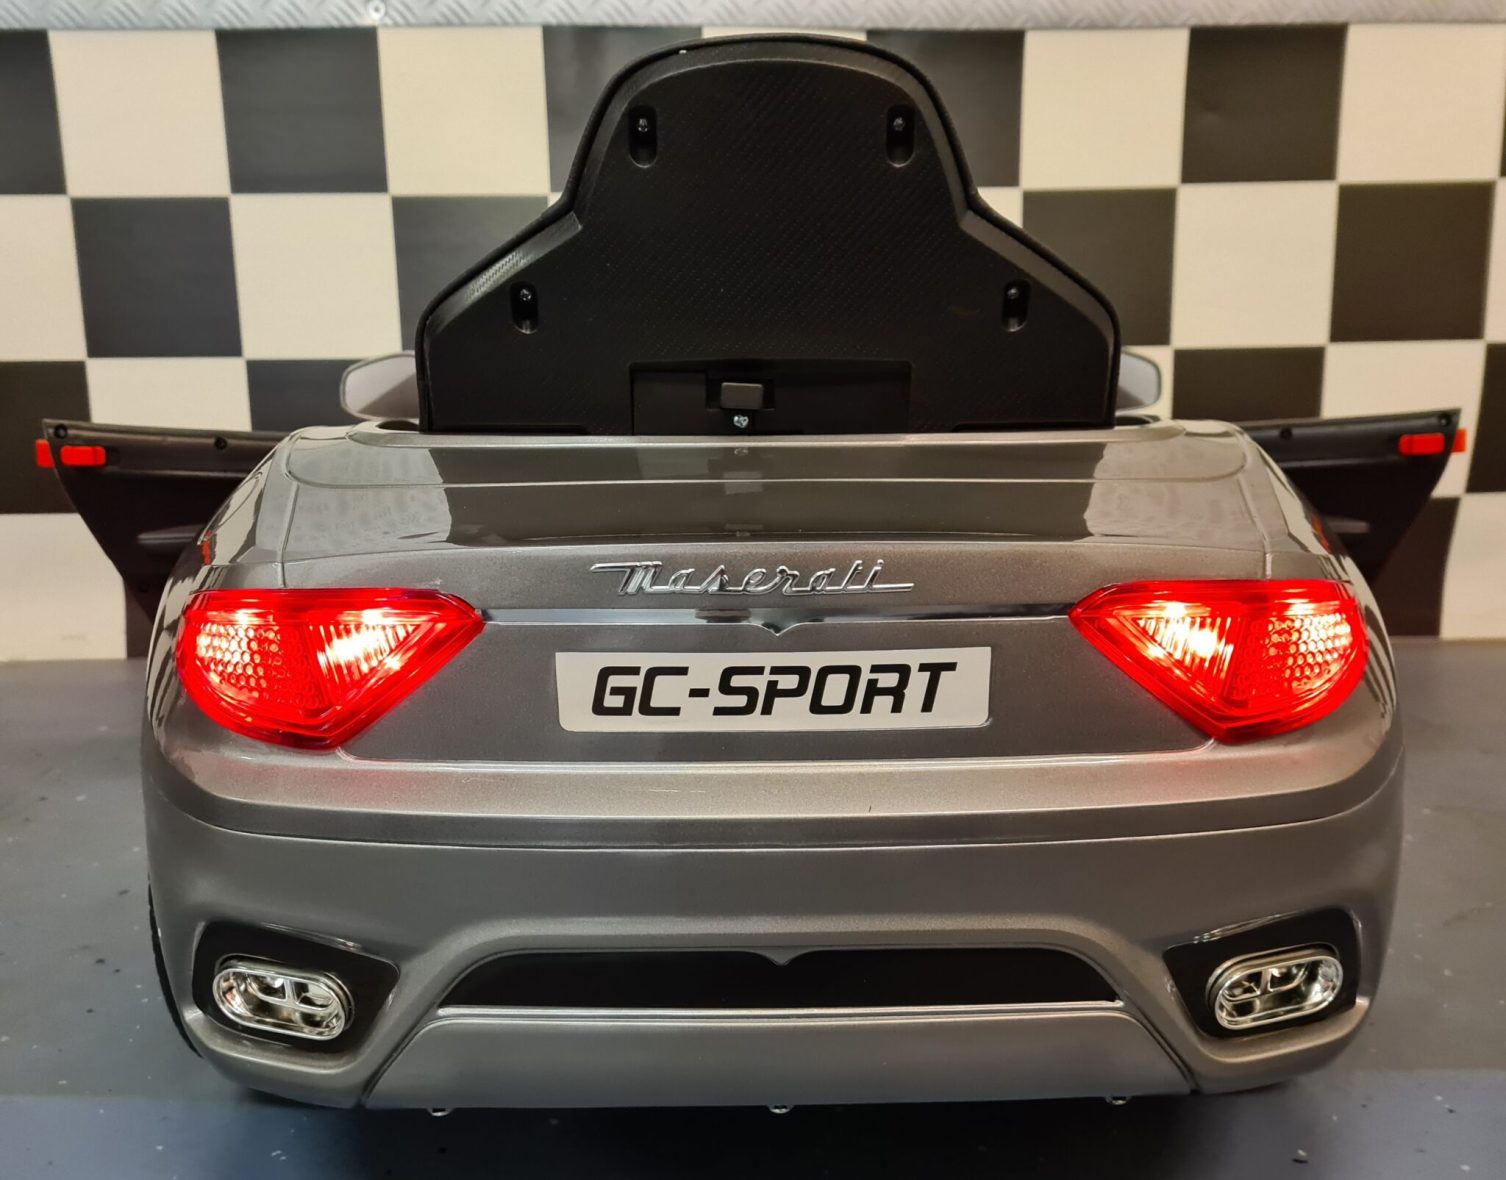 Maserati-GC-sport-accu-kinderauto